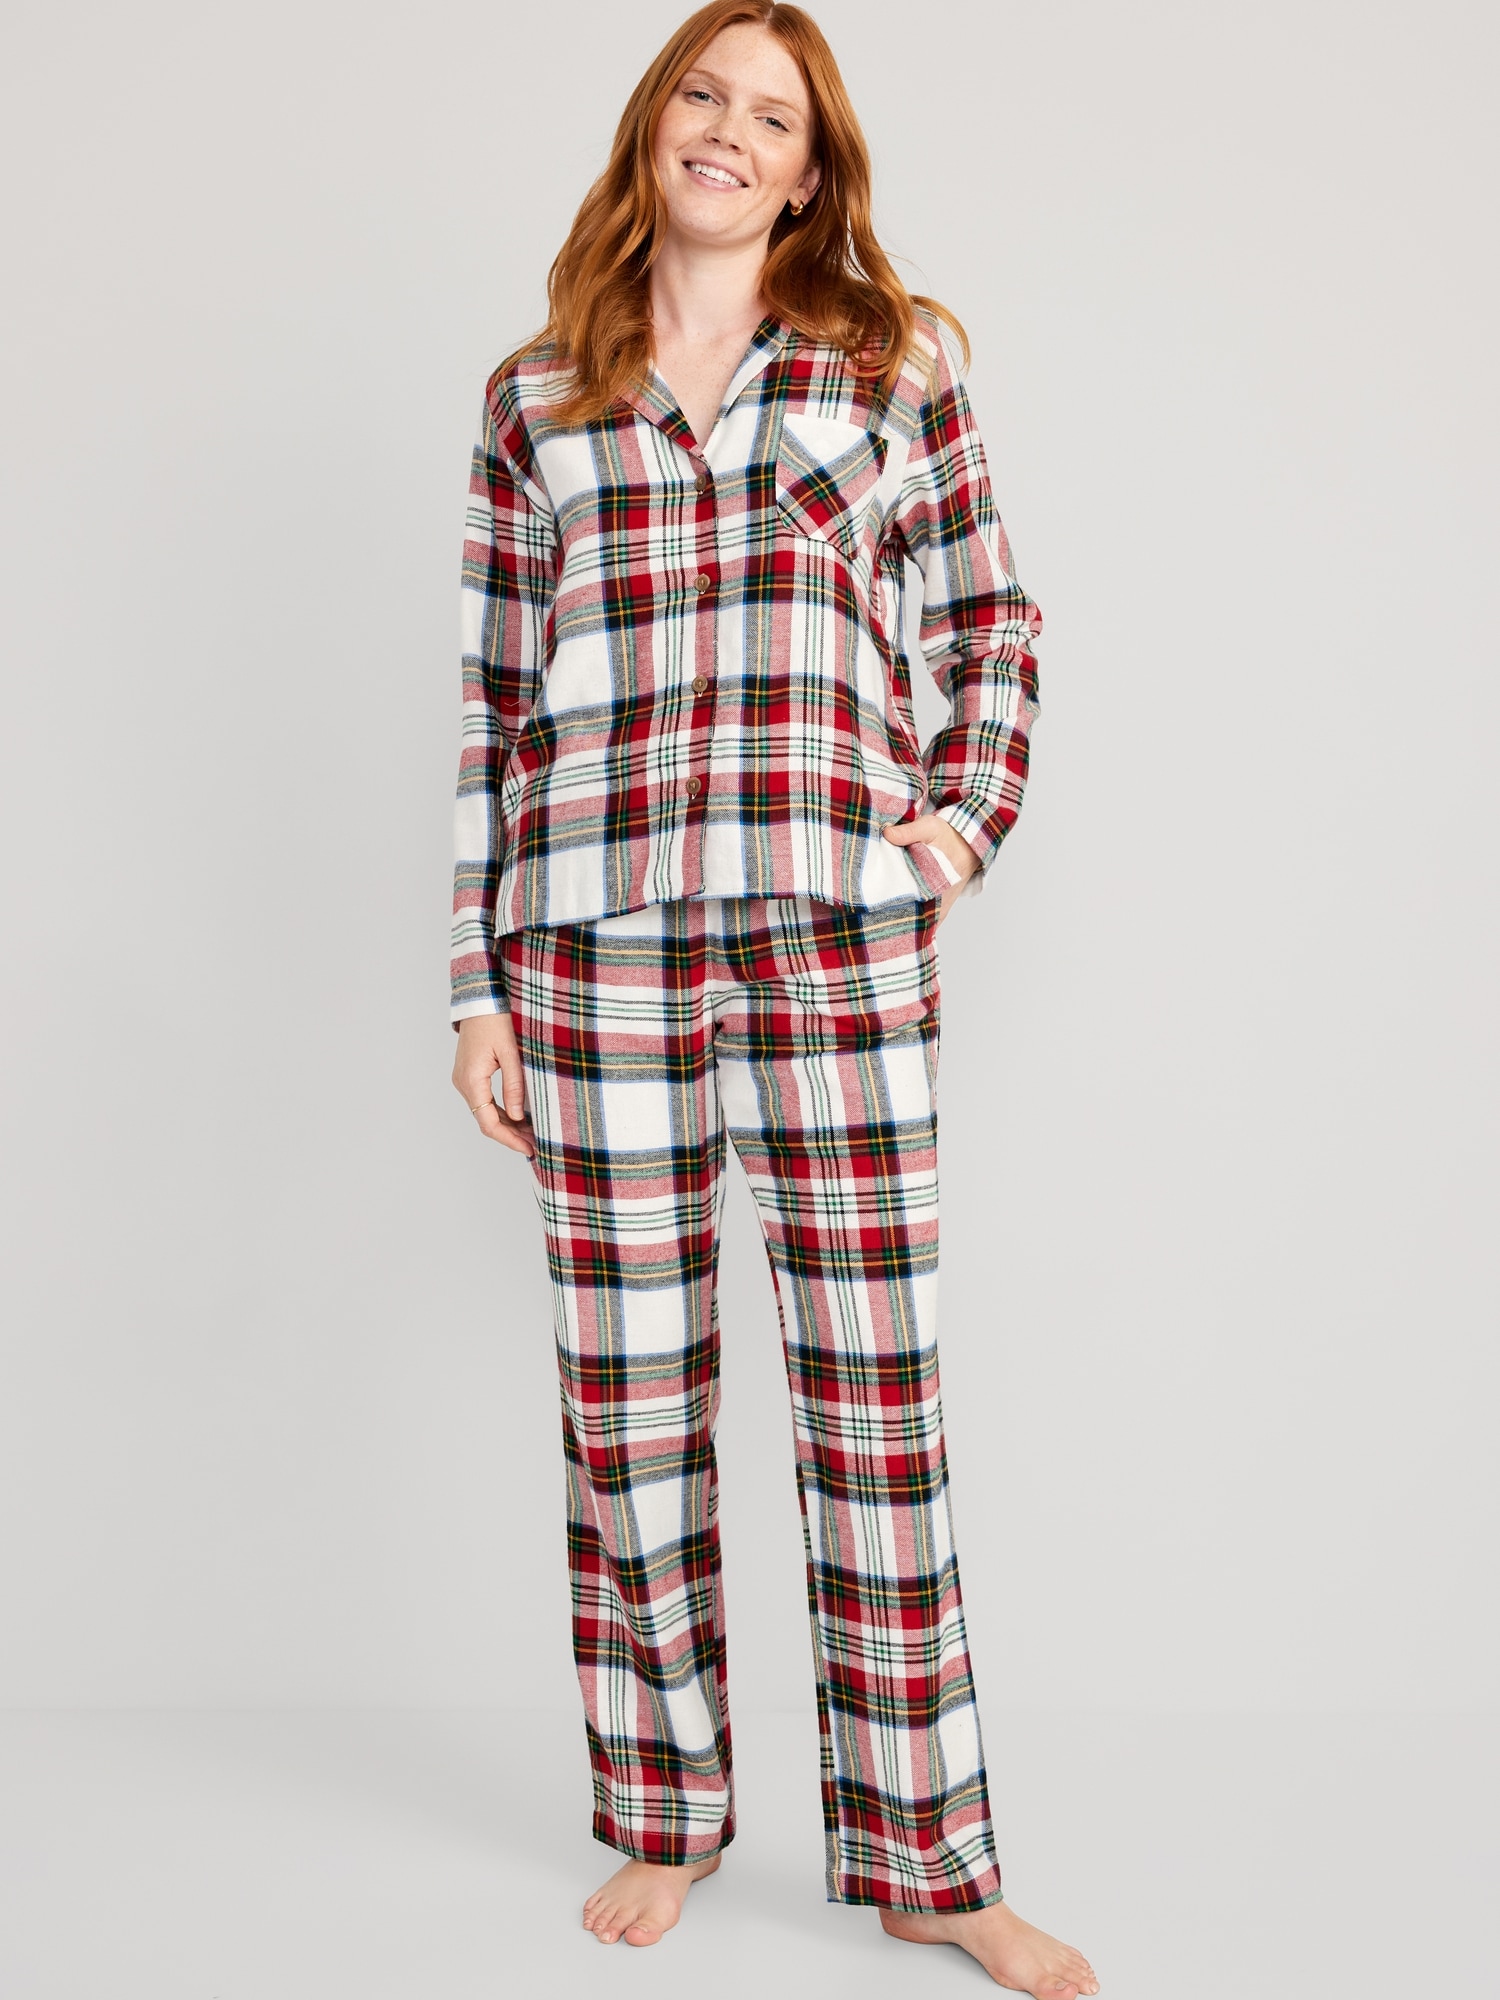 Holiday pajamas  Flannel pajama sets, Pants for women, Flannel pajamas